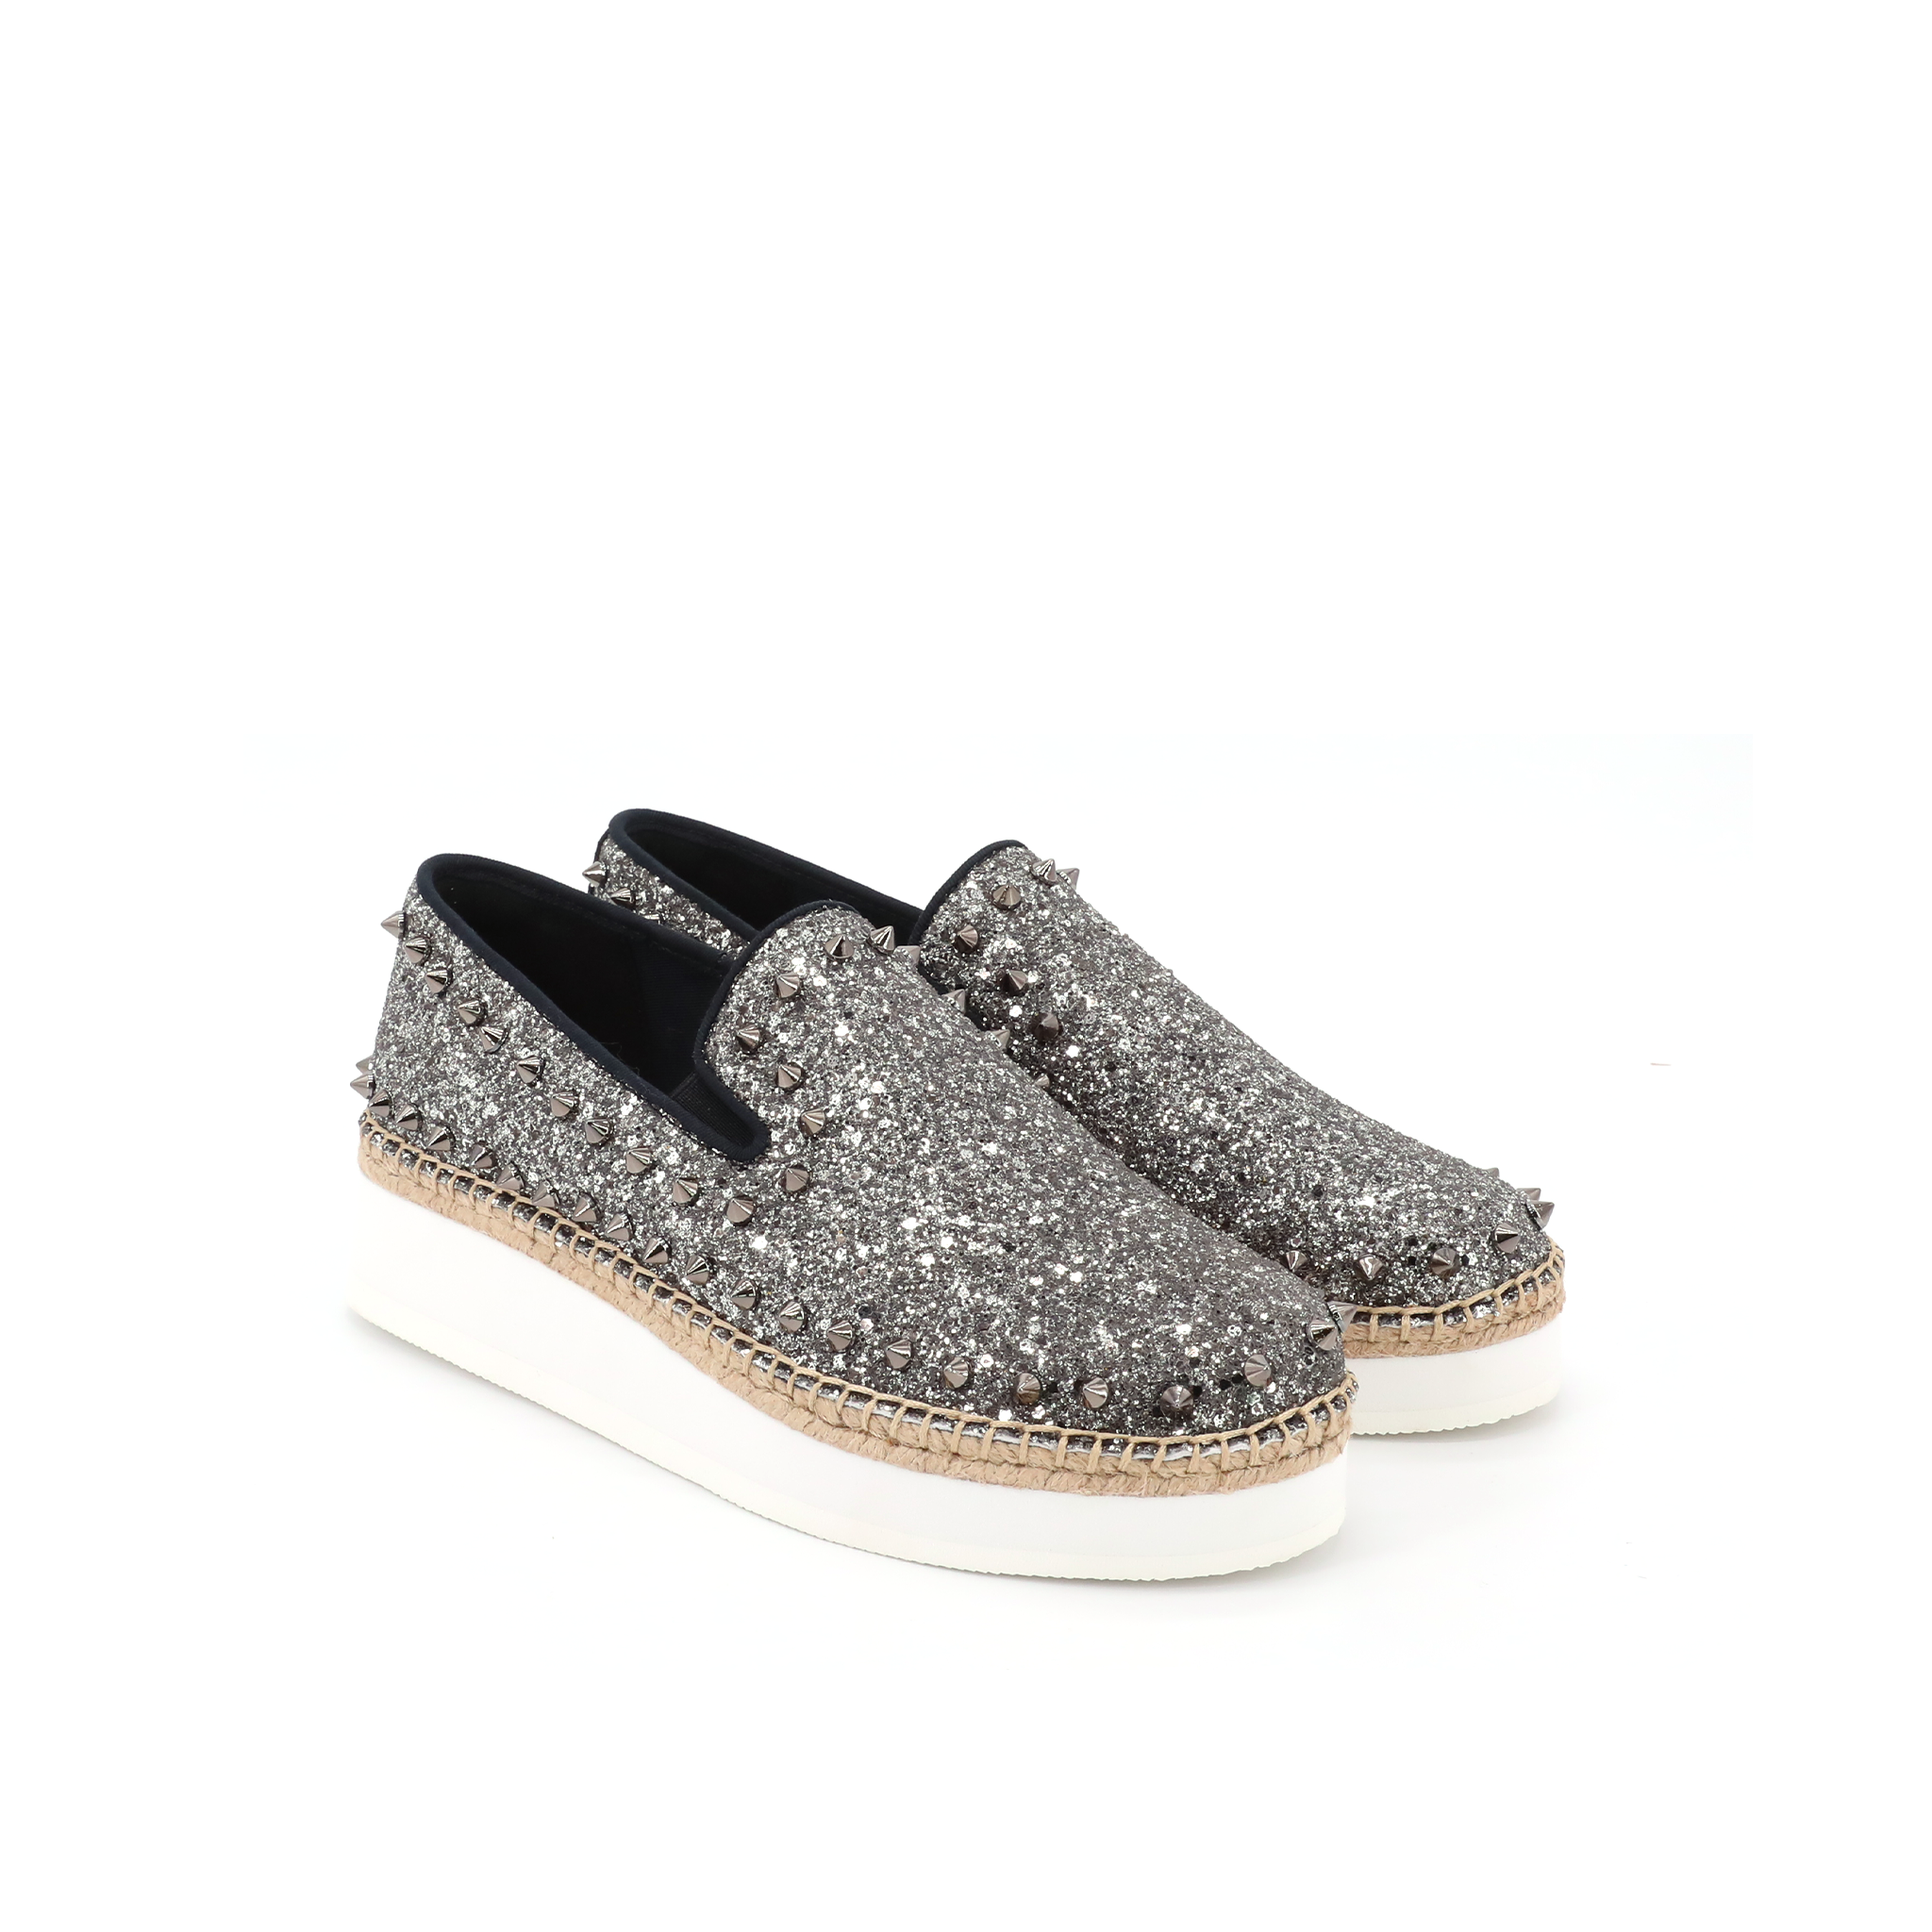 JOY&MARIO Handmade Women’s Slip-On Espadrille Glitter Loafers Platform in DK Grey-75028W